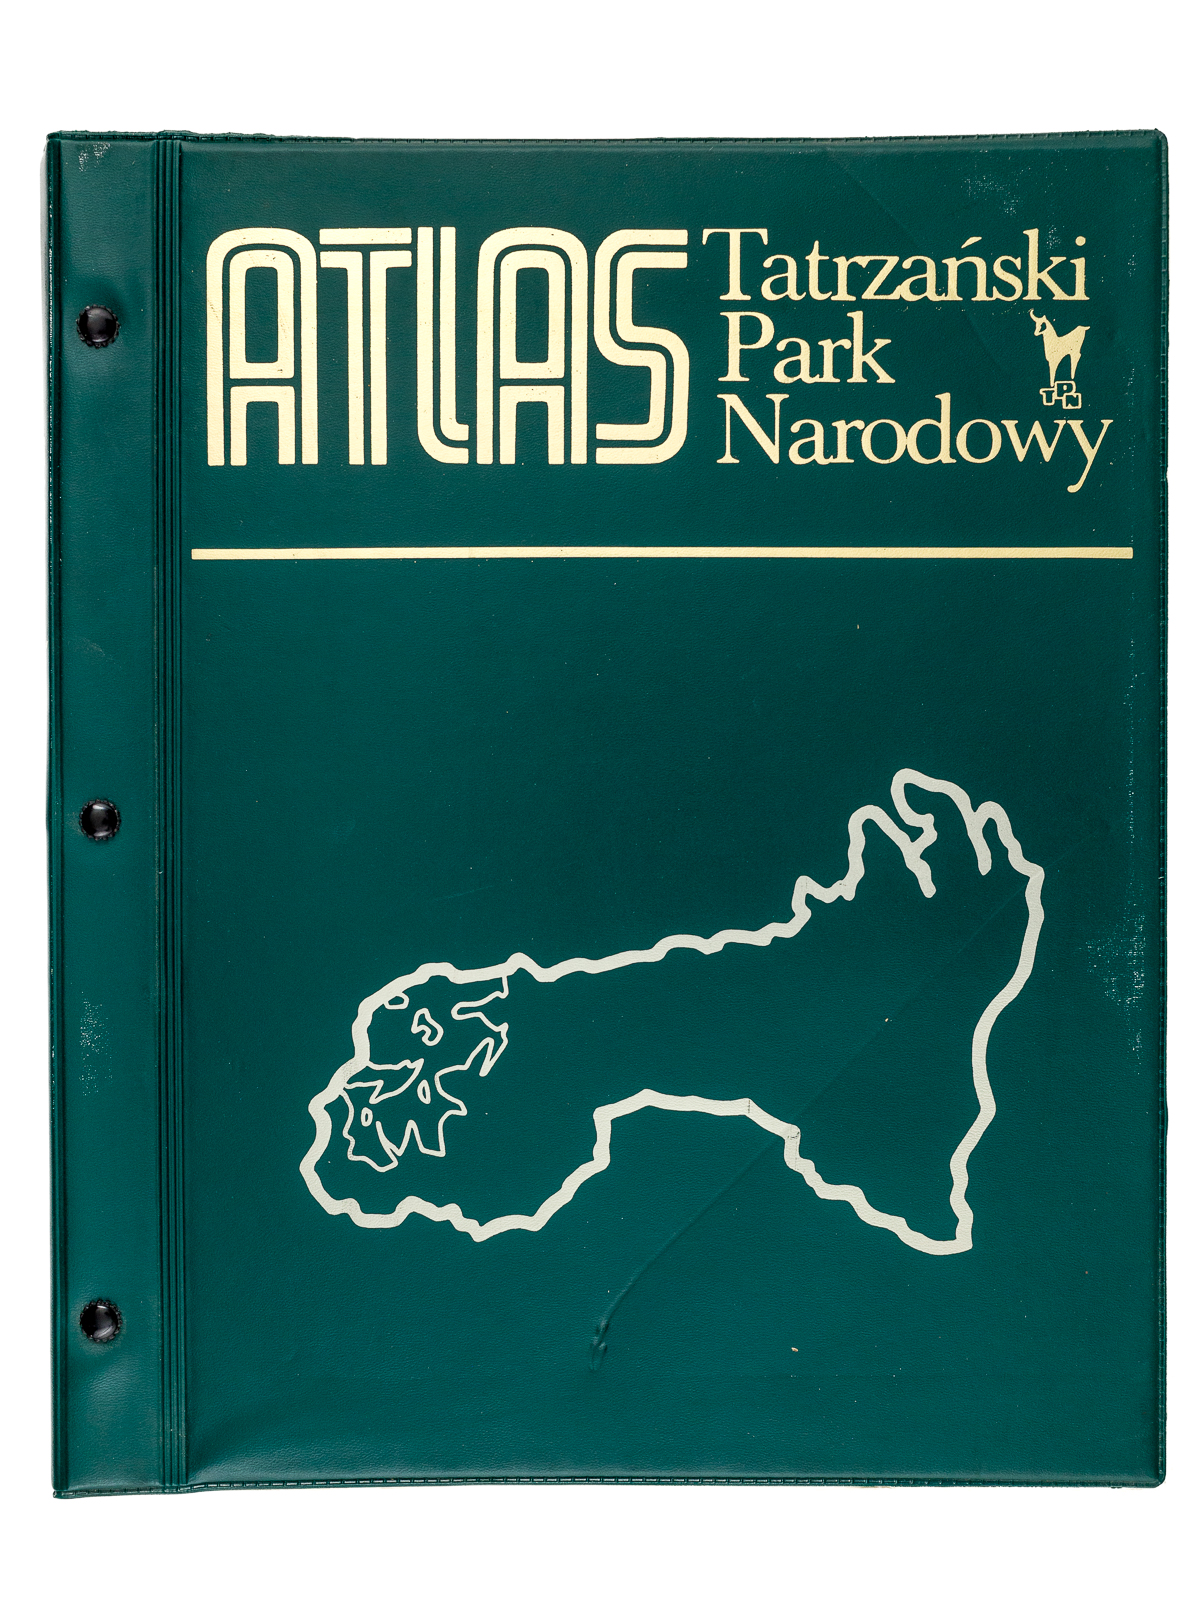 Atlas Tatrzanskiego Parku Narodowego Tatrzanski Park Narodowy Polonais Relié Europe Divers 5411